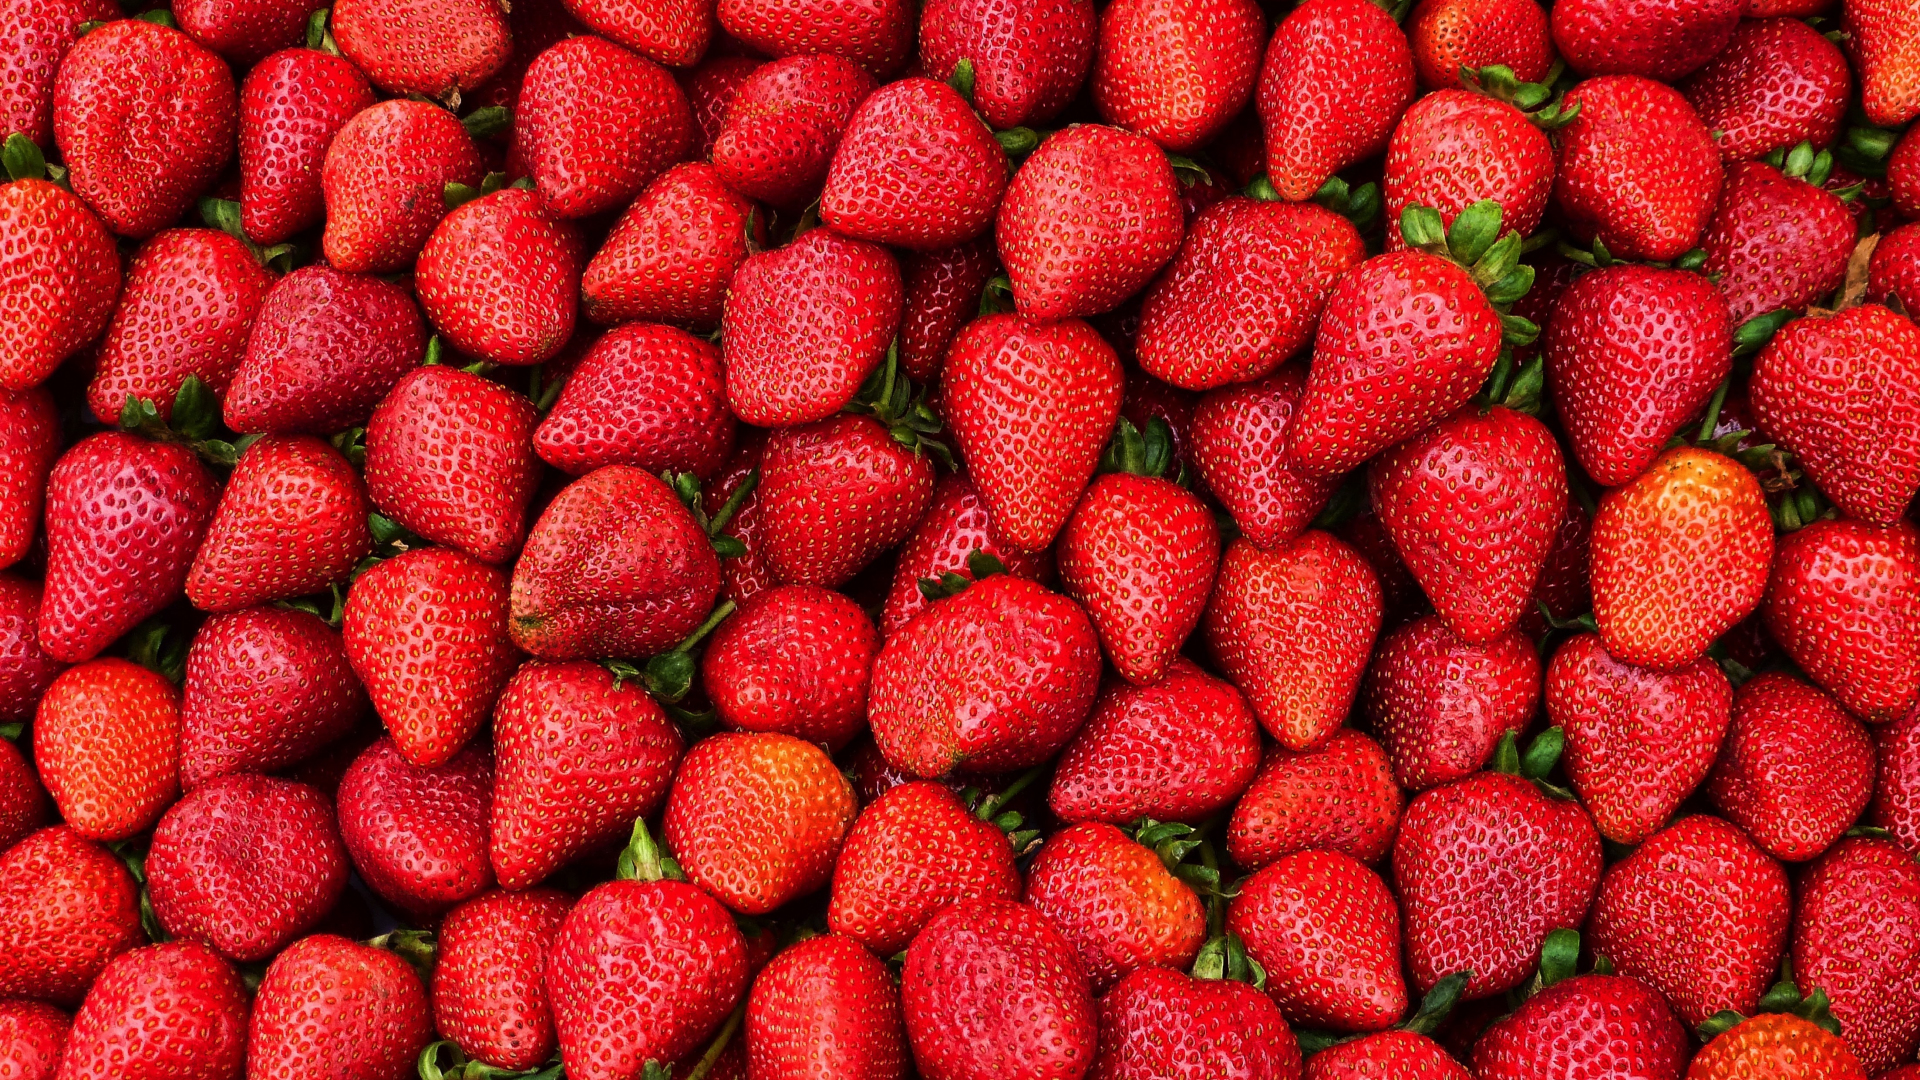 Download wallpaper 1920x1080 strawberries, berries, fruit, red, full hd, hdtv, fhd, 1080p wallpaper, 1920x1080 HD background, 991